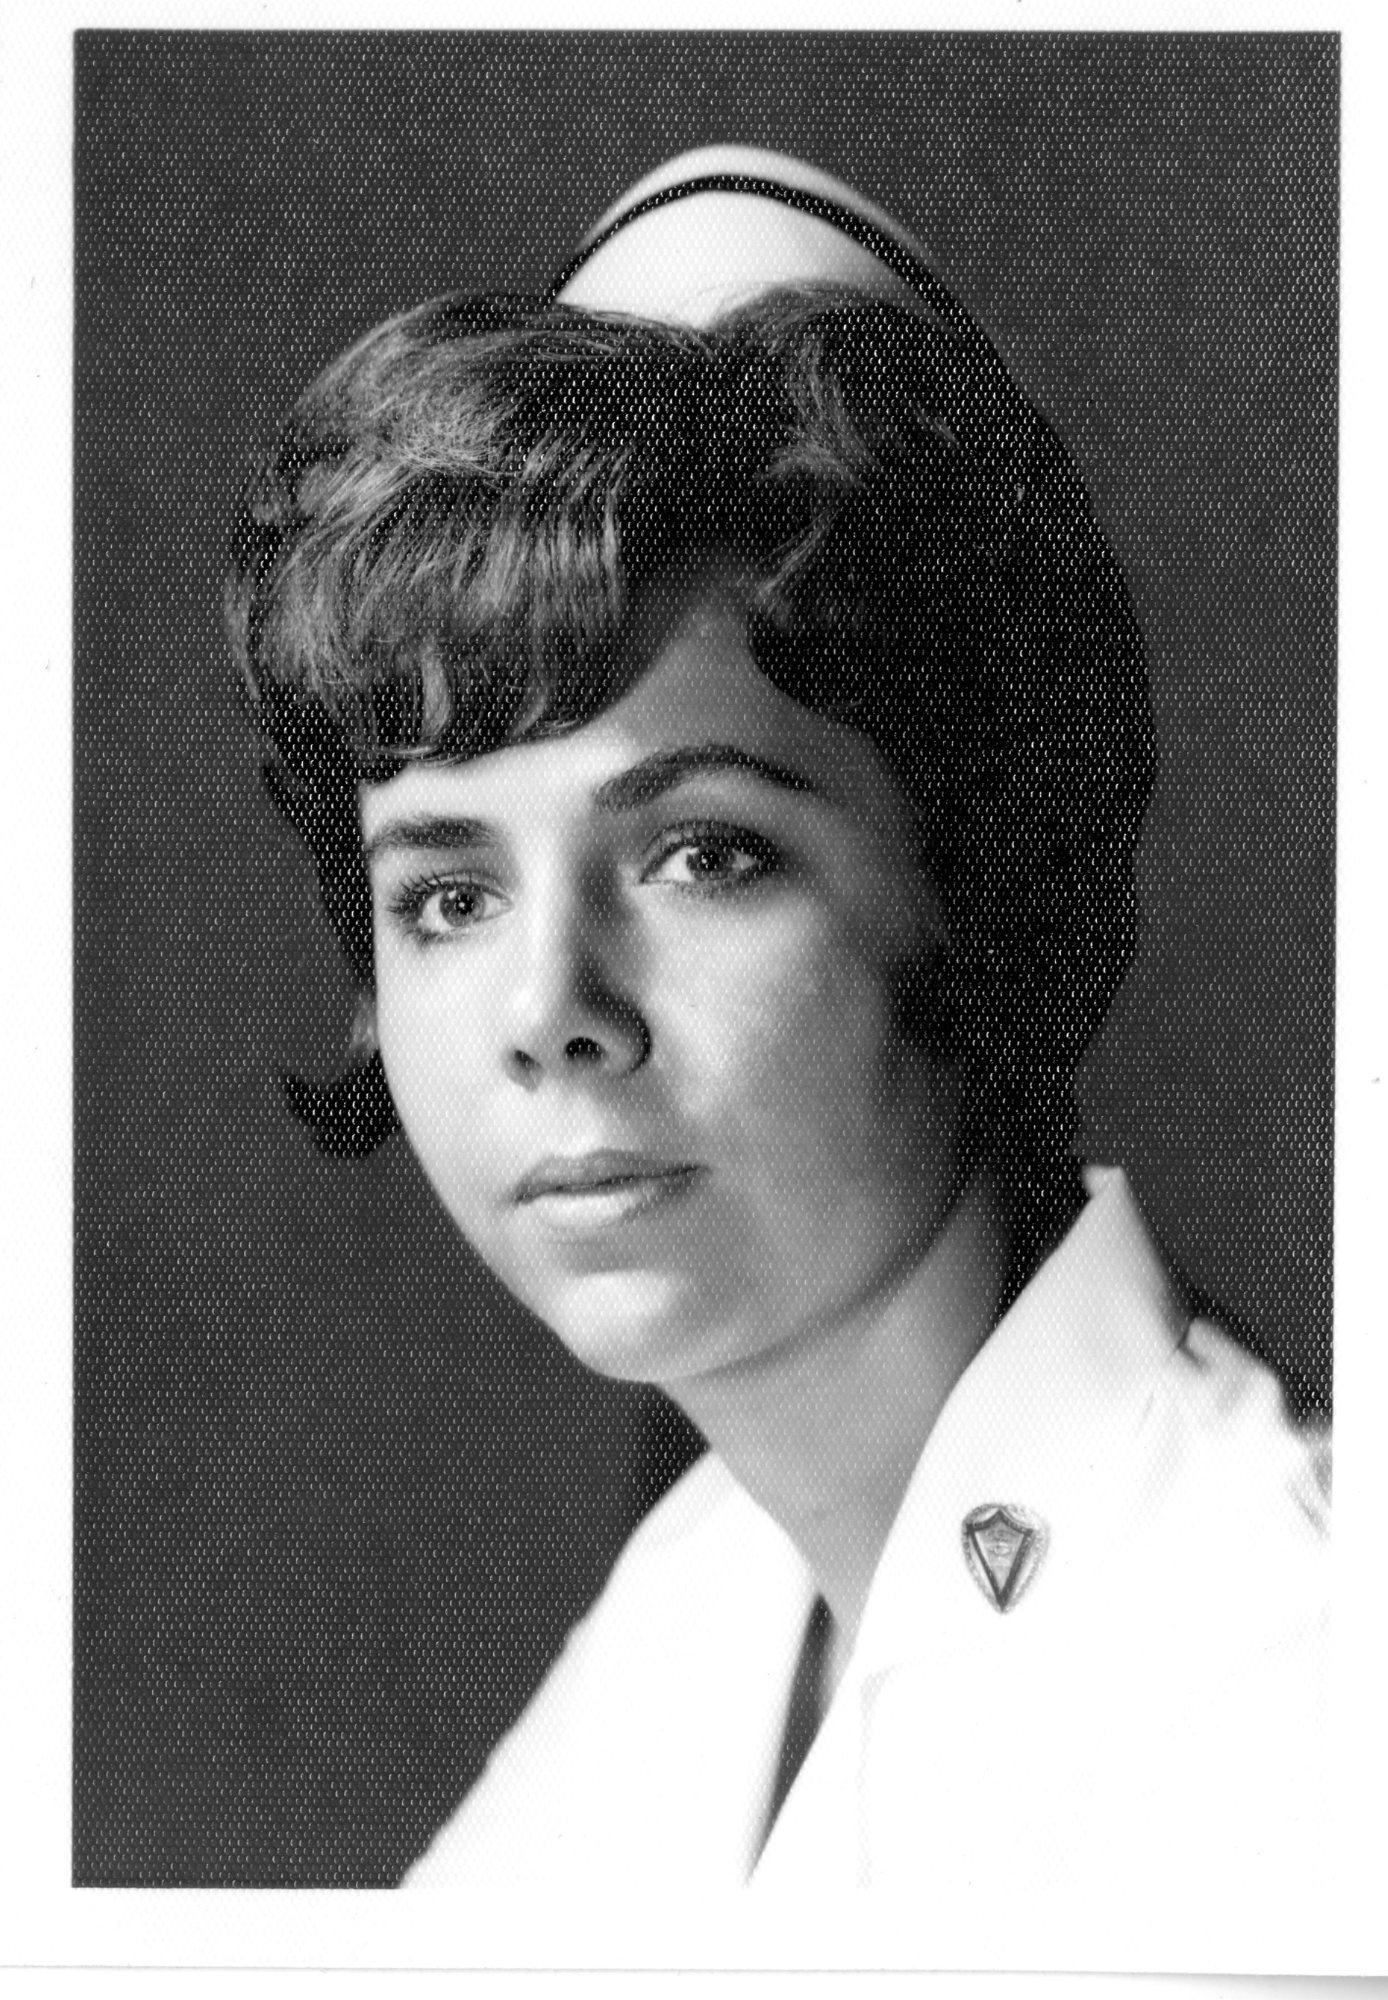 Sandra Kaye Pruitt Petker graduated from Daytona Beach Community College (now Daytona State College) in 1966. Courtesy of Dr. Larry Petker